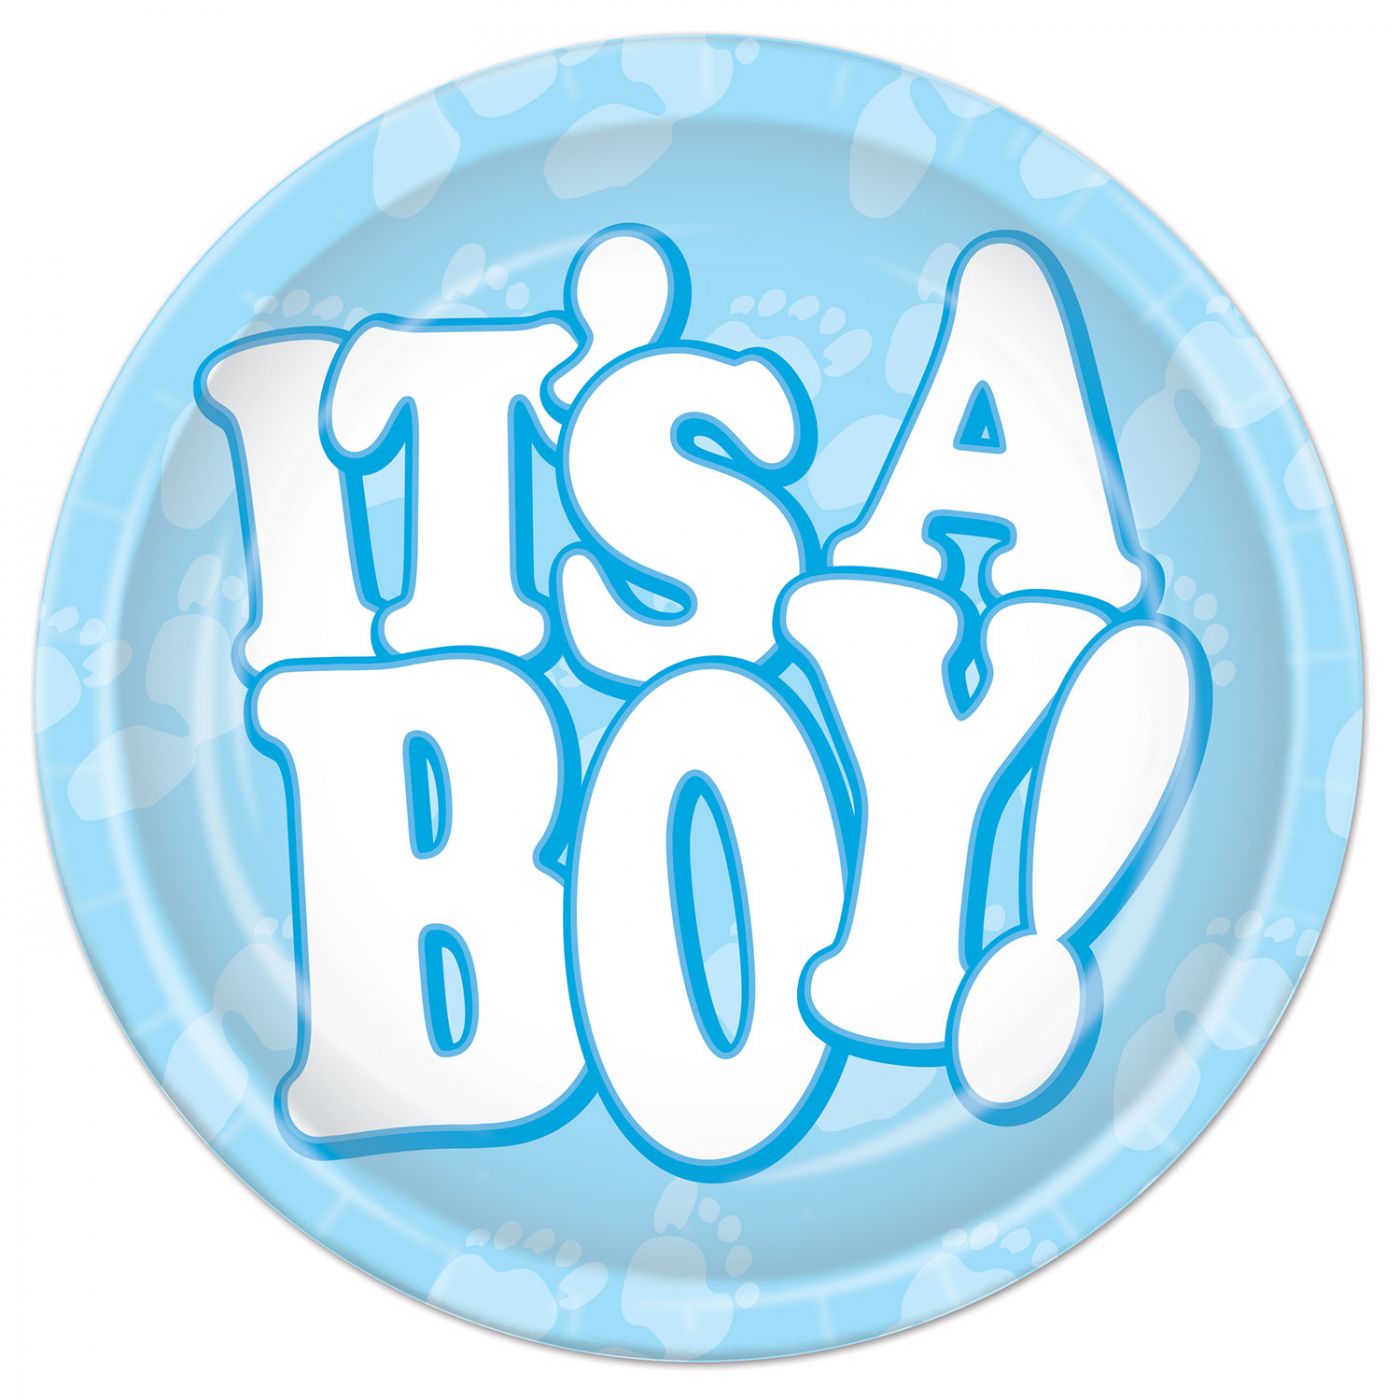 It's A Boy! Plates (12) image